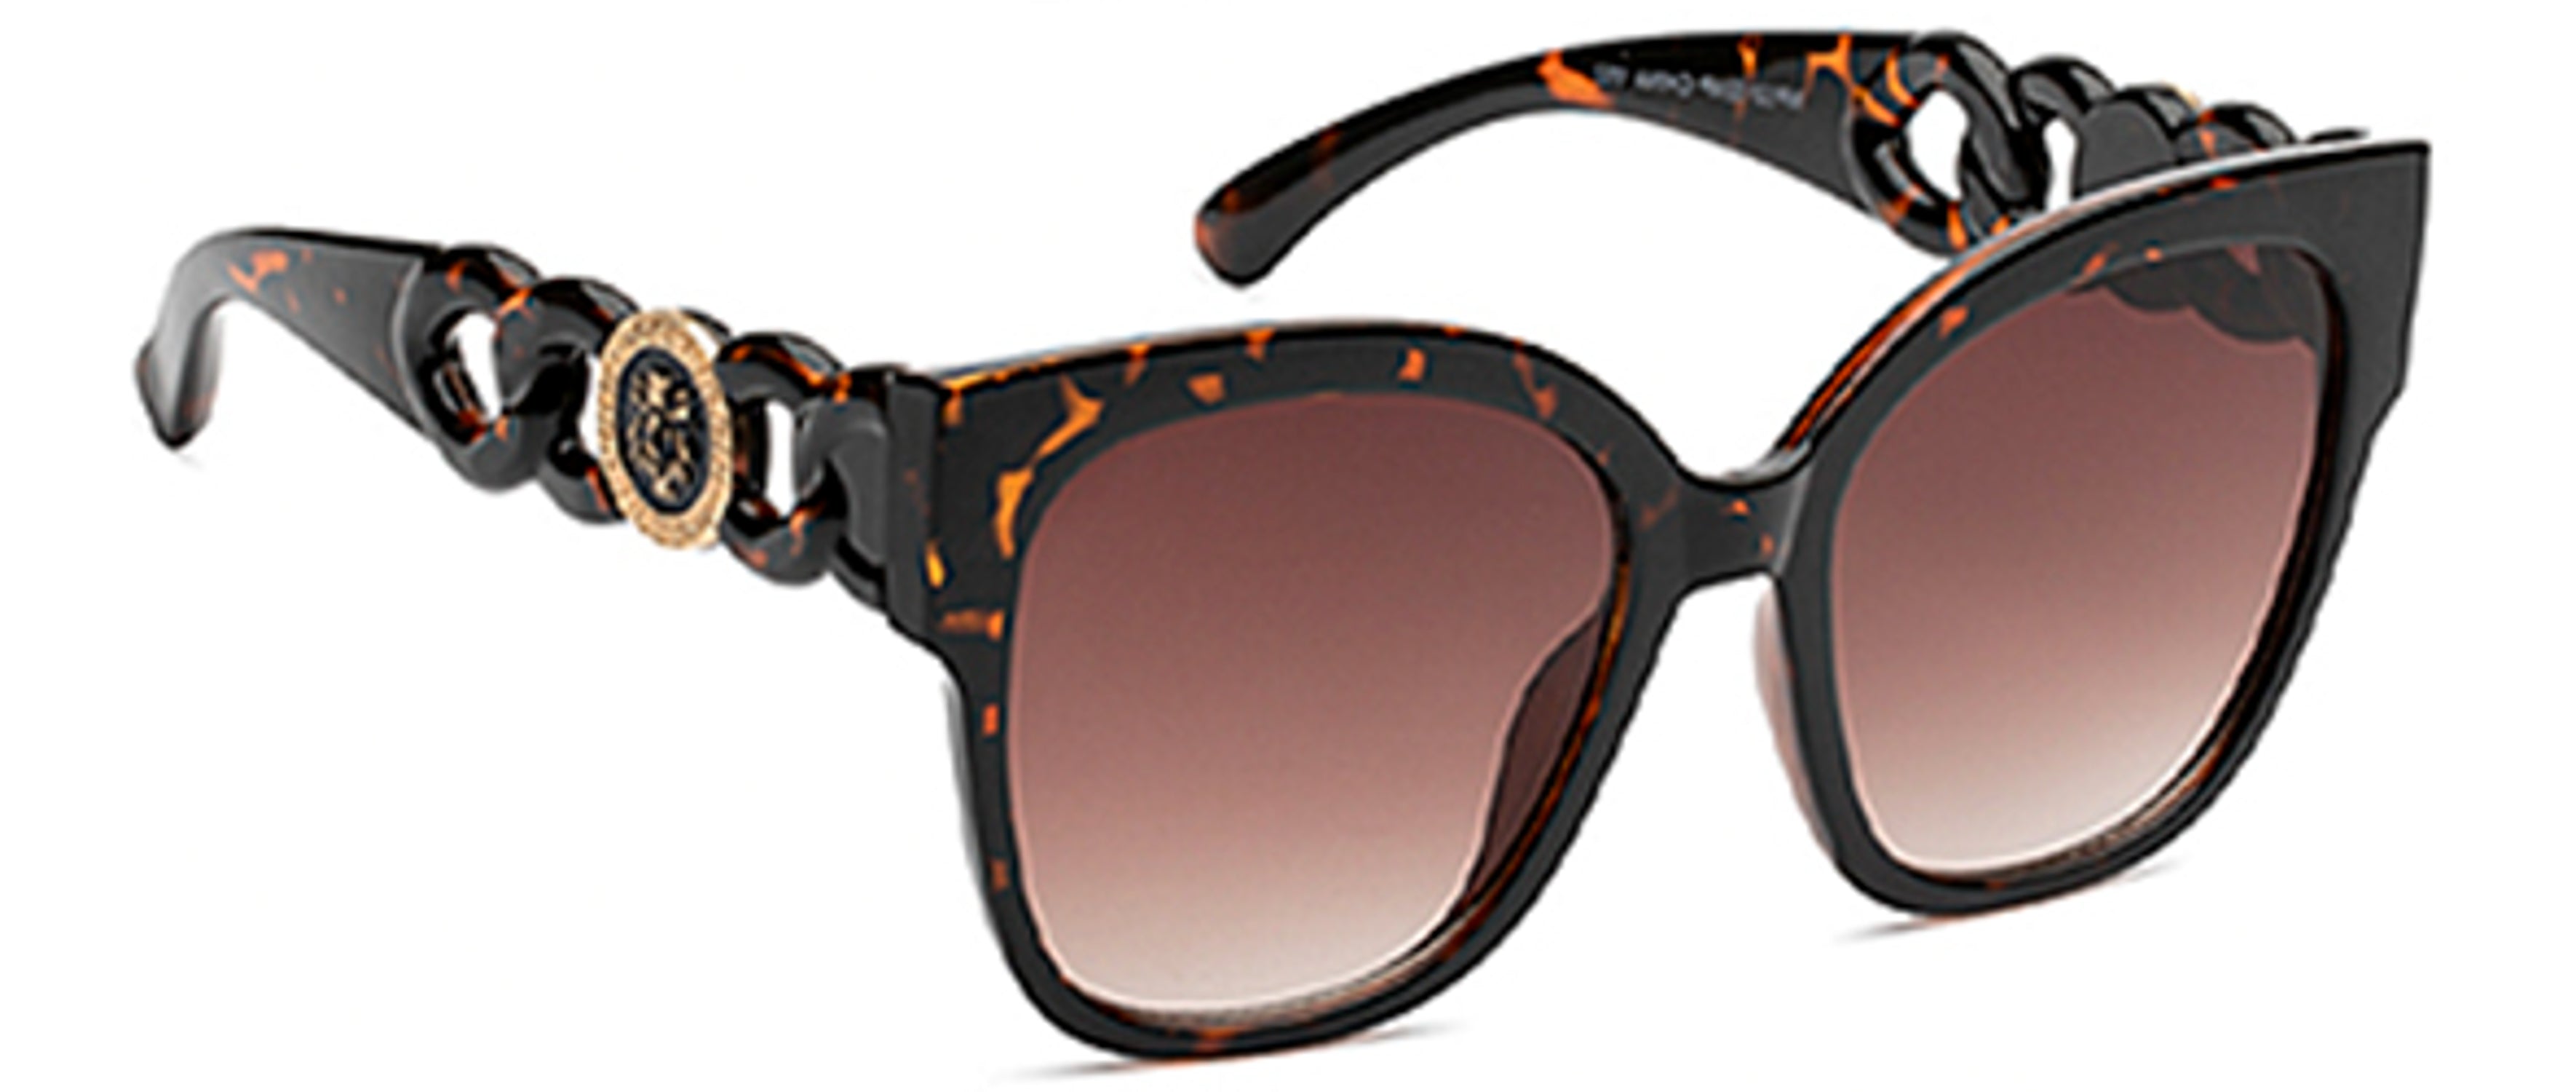 Animal Print - Fashion Design Round Cat Eye Sunglasses - Sunglasses at TFC&H Co.